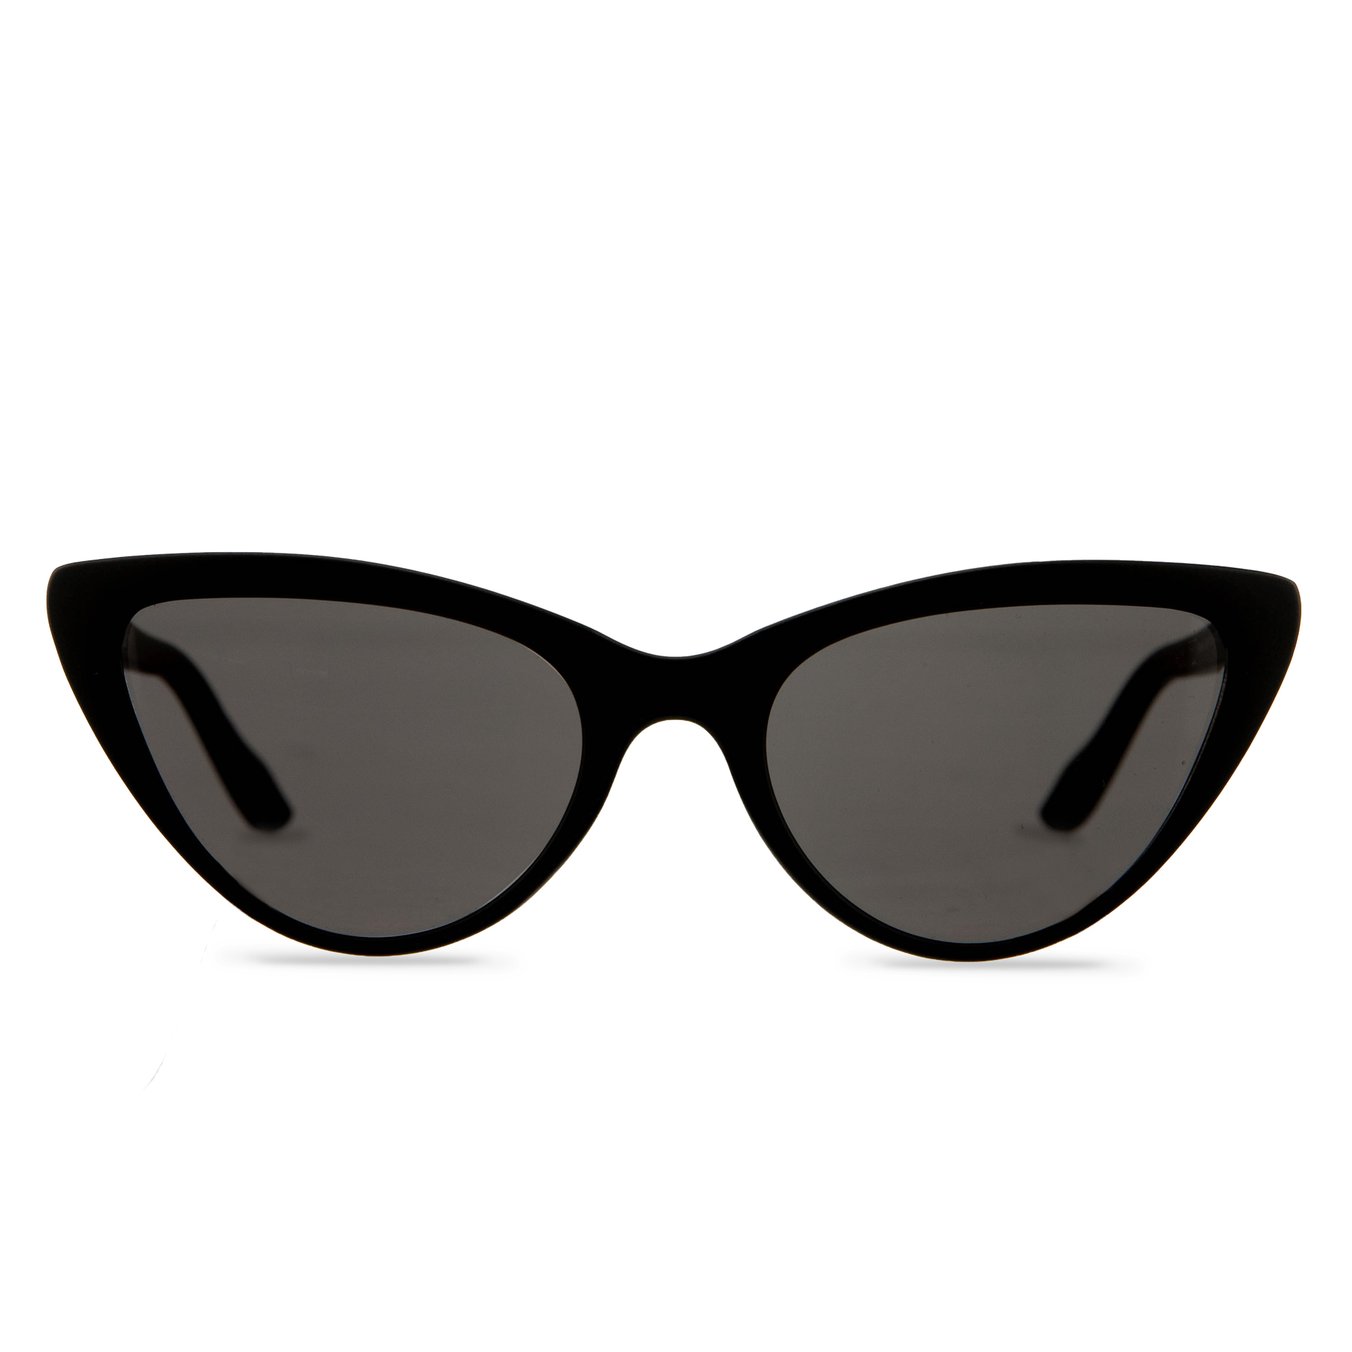 China cheap polarized sunglasses hot sale| Alibaba.com